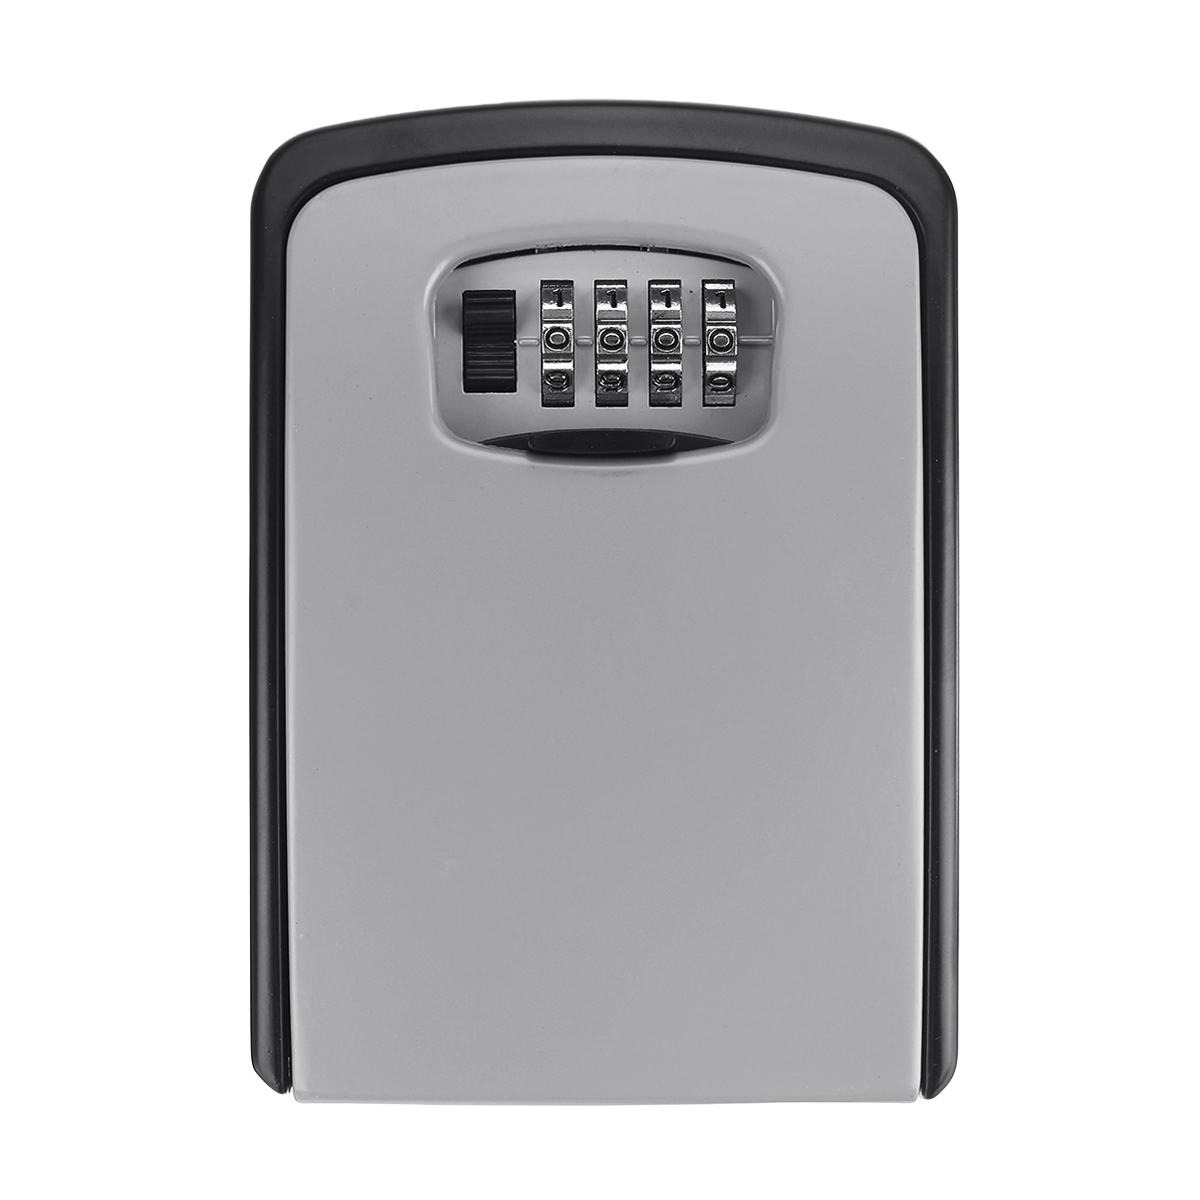 Outdoor-Wall-Mounted-Key-Safe-Combination-Lock-Storage-Box-4-Digital-Password-1693477-9